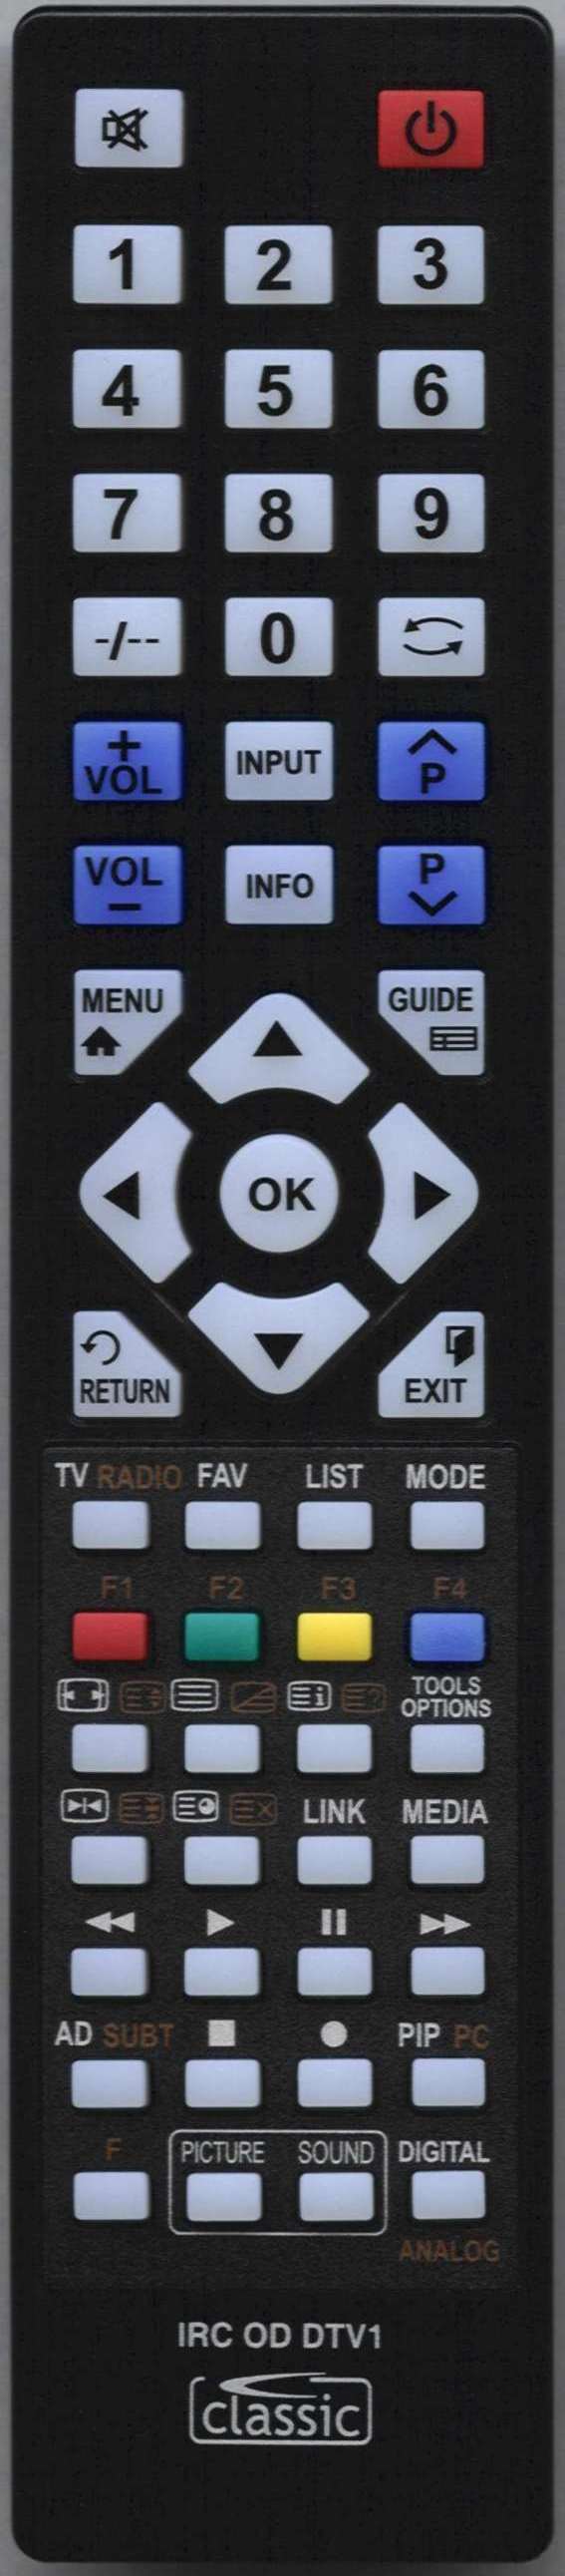 UMC M22/20 no DVD (Ipod TV - Black) Remote Control Alternative